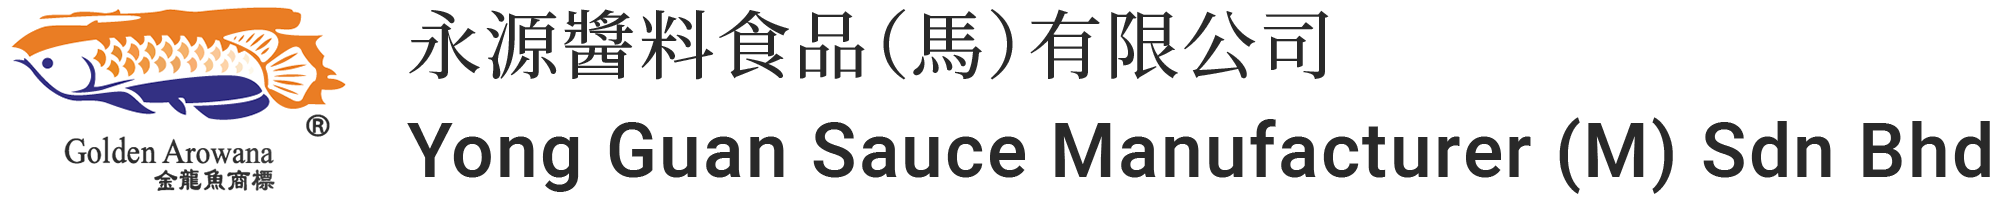 	
		Yong Guan Sauce Manufacturer (M) Sdn Bhd